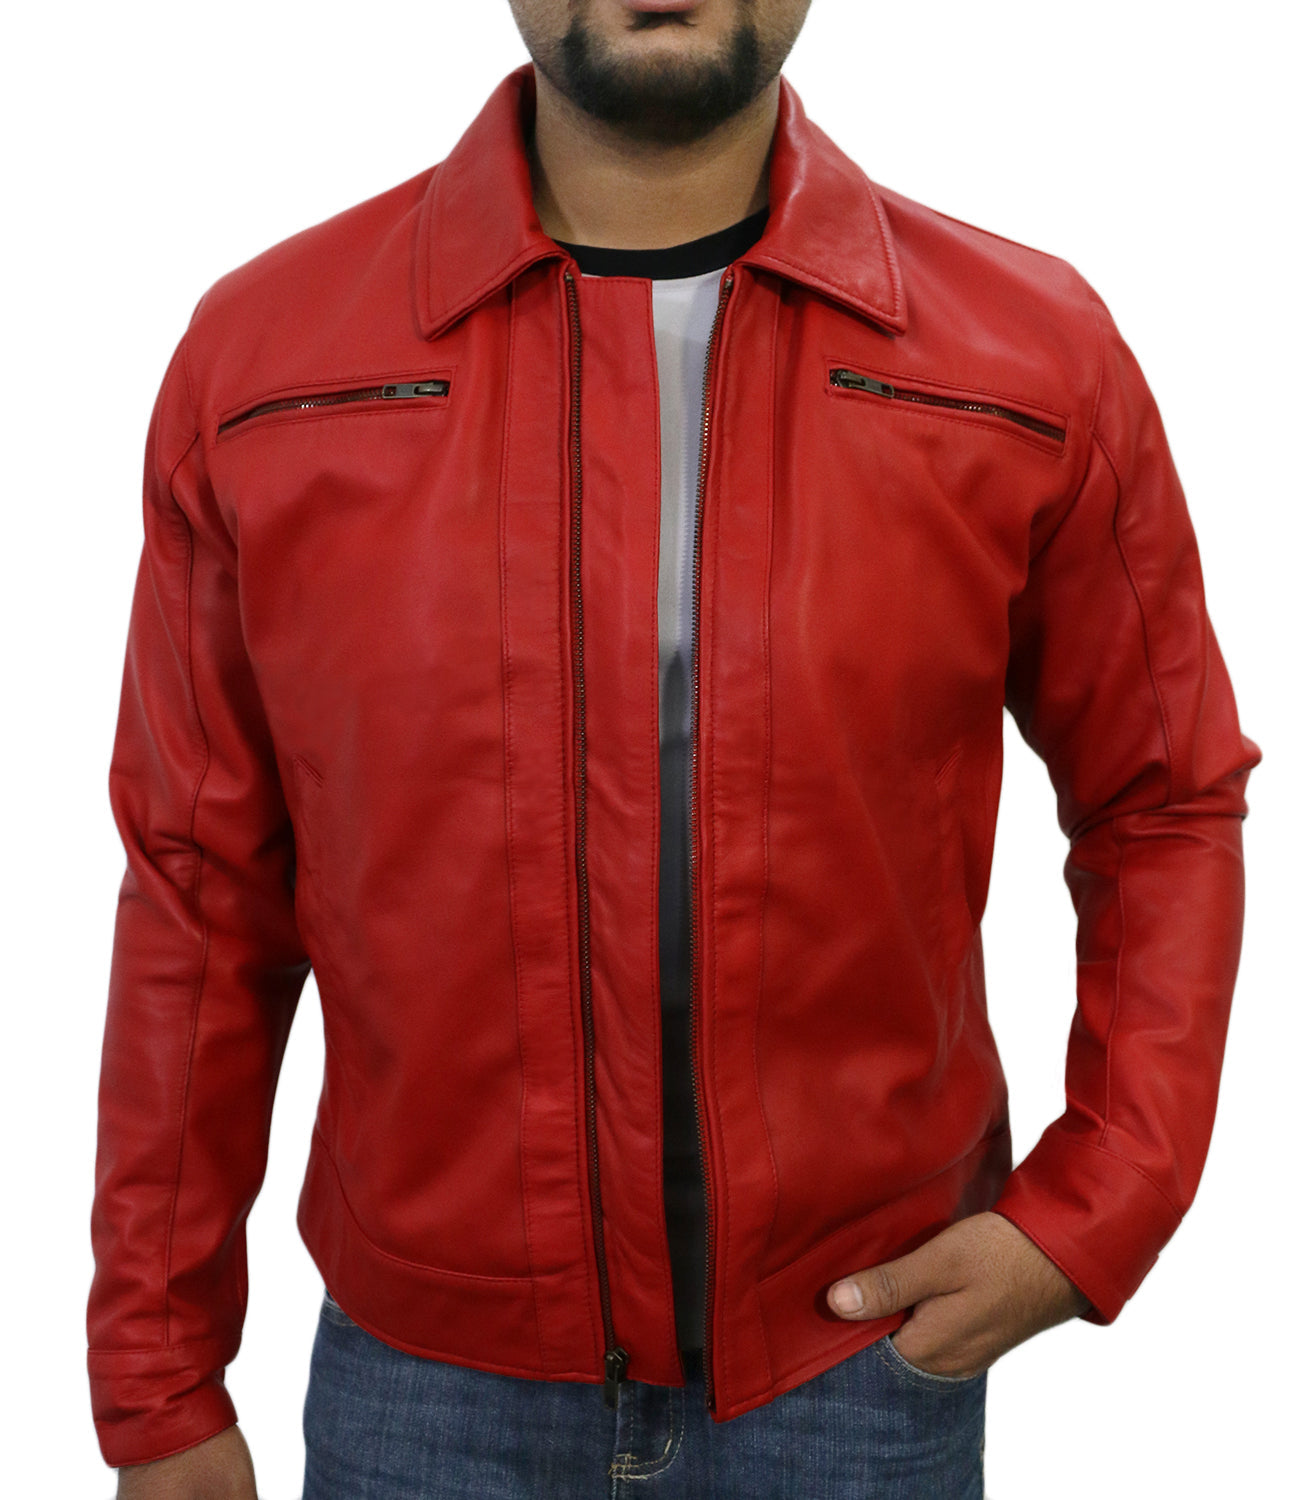 Leather Jackets Hub Mens Genuine Lambskin Leather Jacket (Black, Aviator Jacket) - 1501336